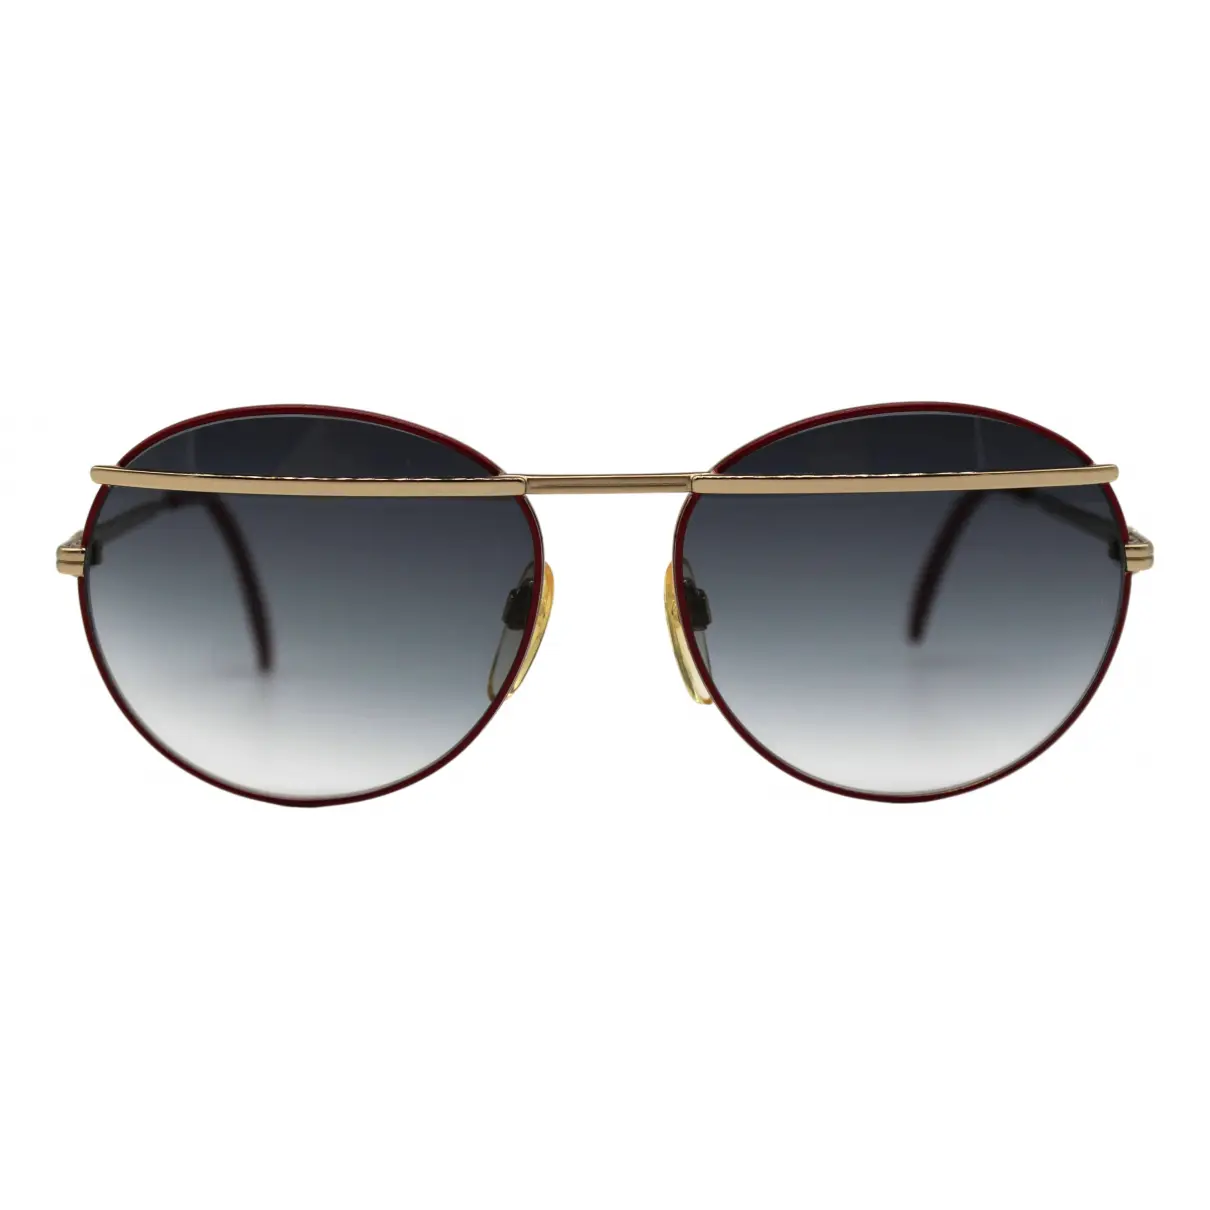 Oversized sunglasses Silhouette - Vintage